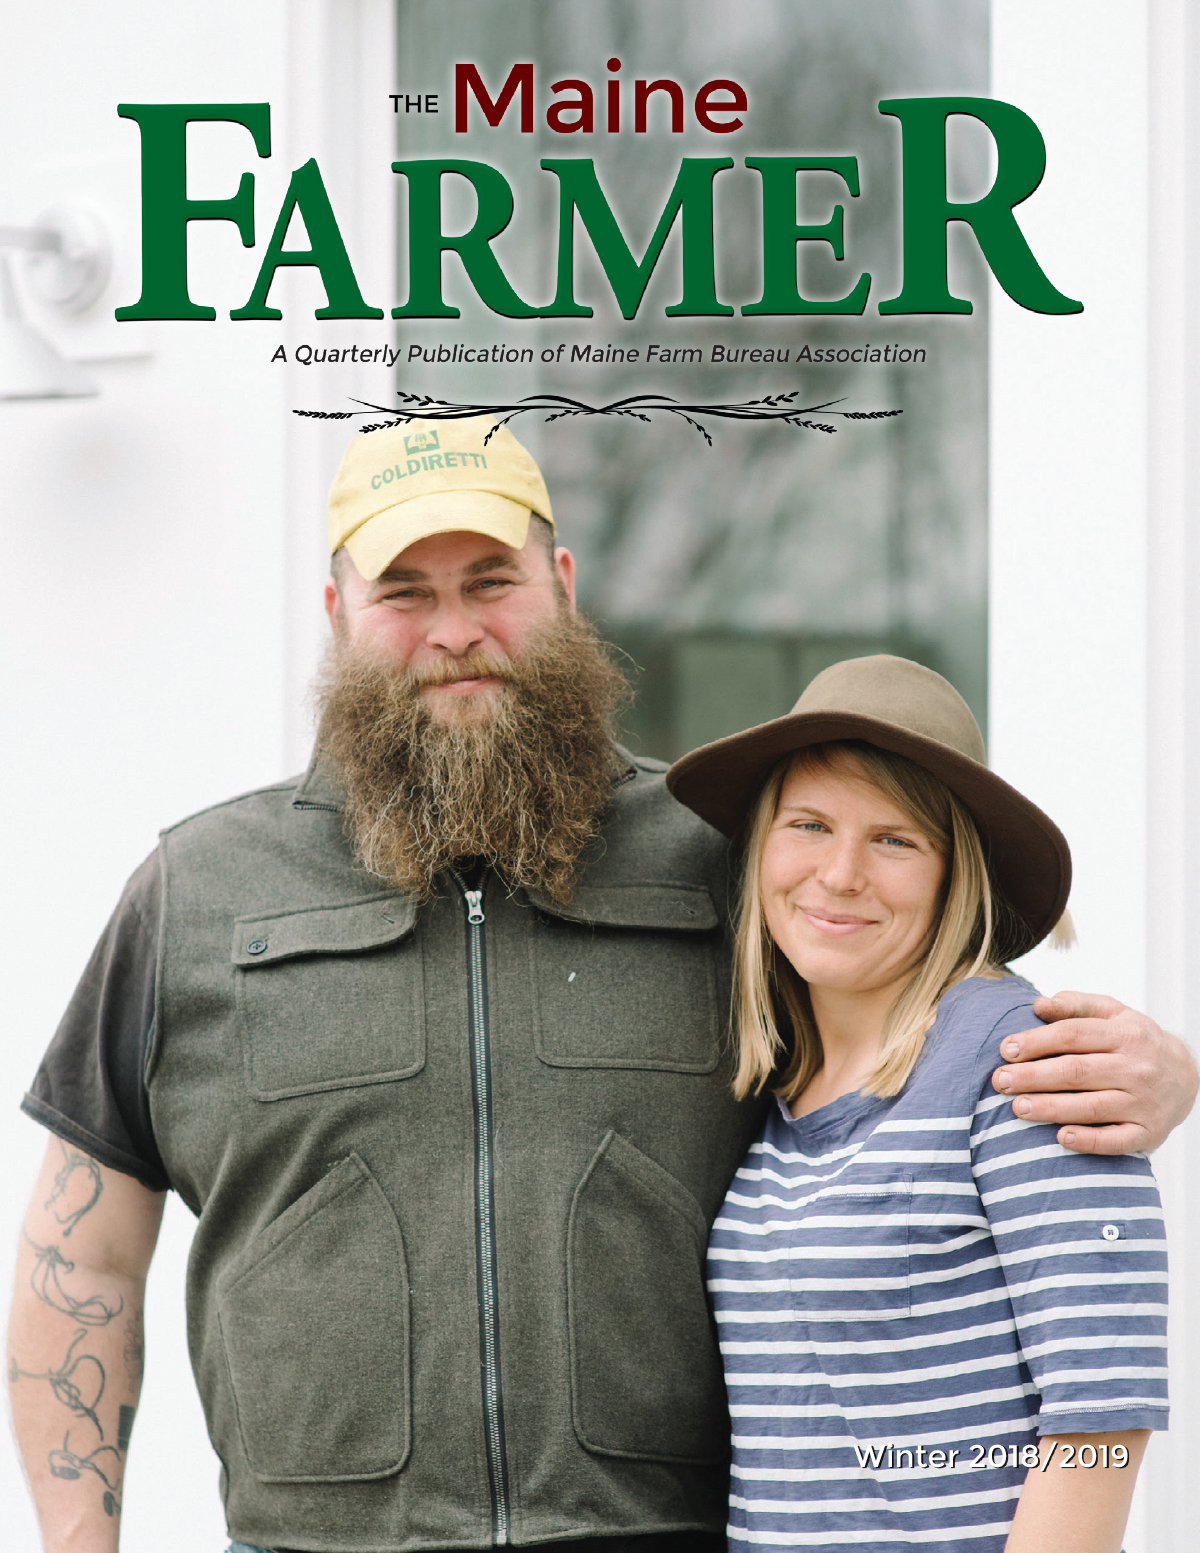 Jim Buckle and his wife Hannah appeared on the cover of the Maine Farm Bureau's winter magazine. Photo: Elizabeth Laduca/Maine Farm Bureau